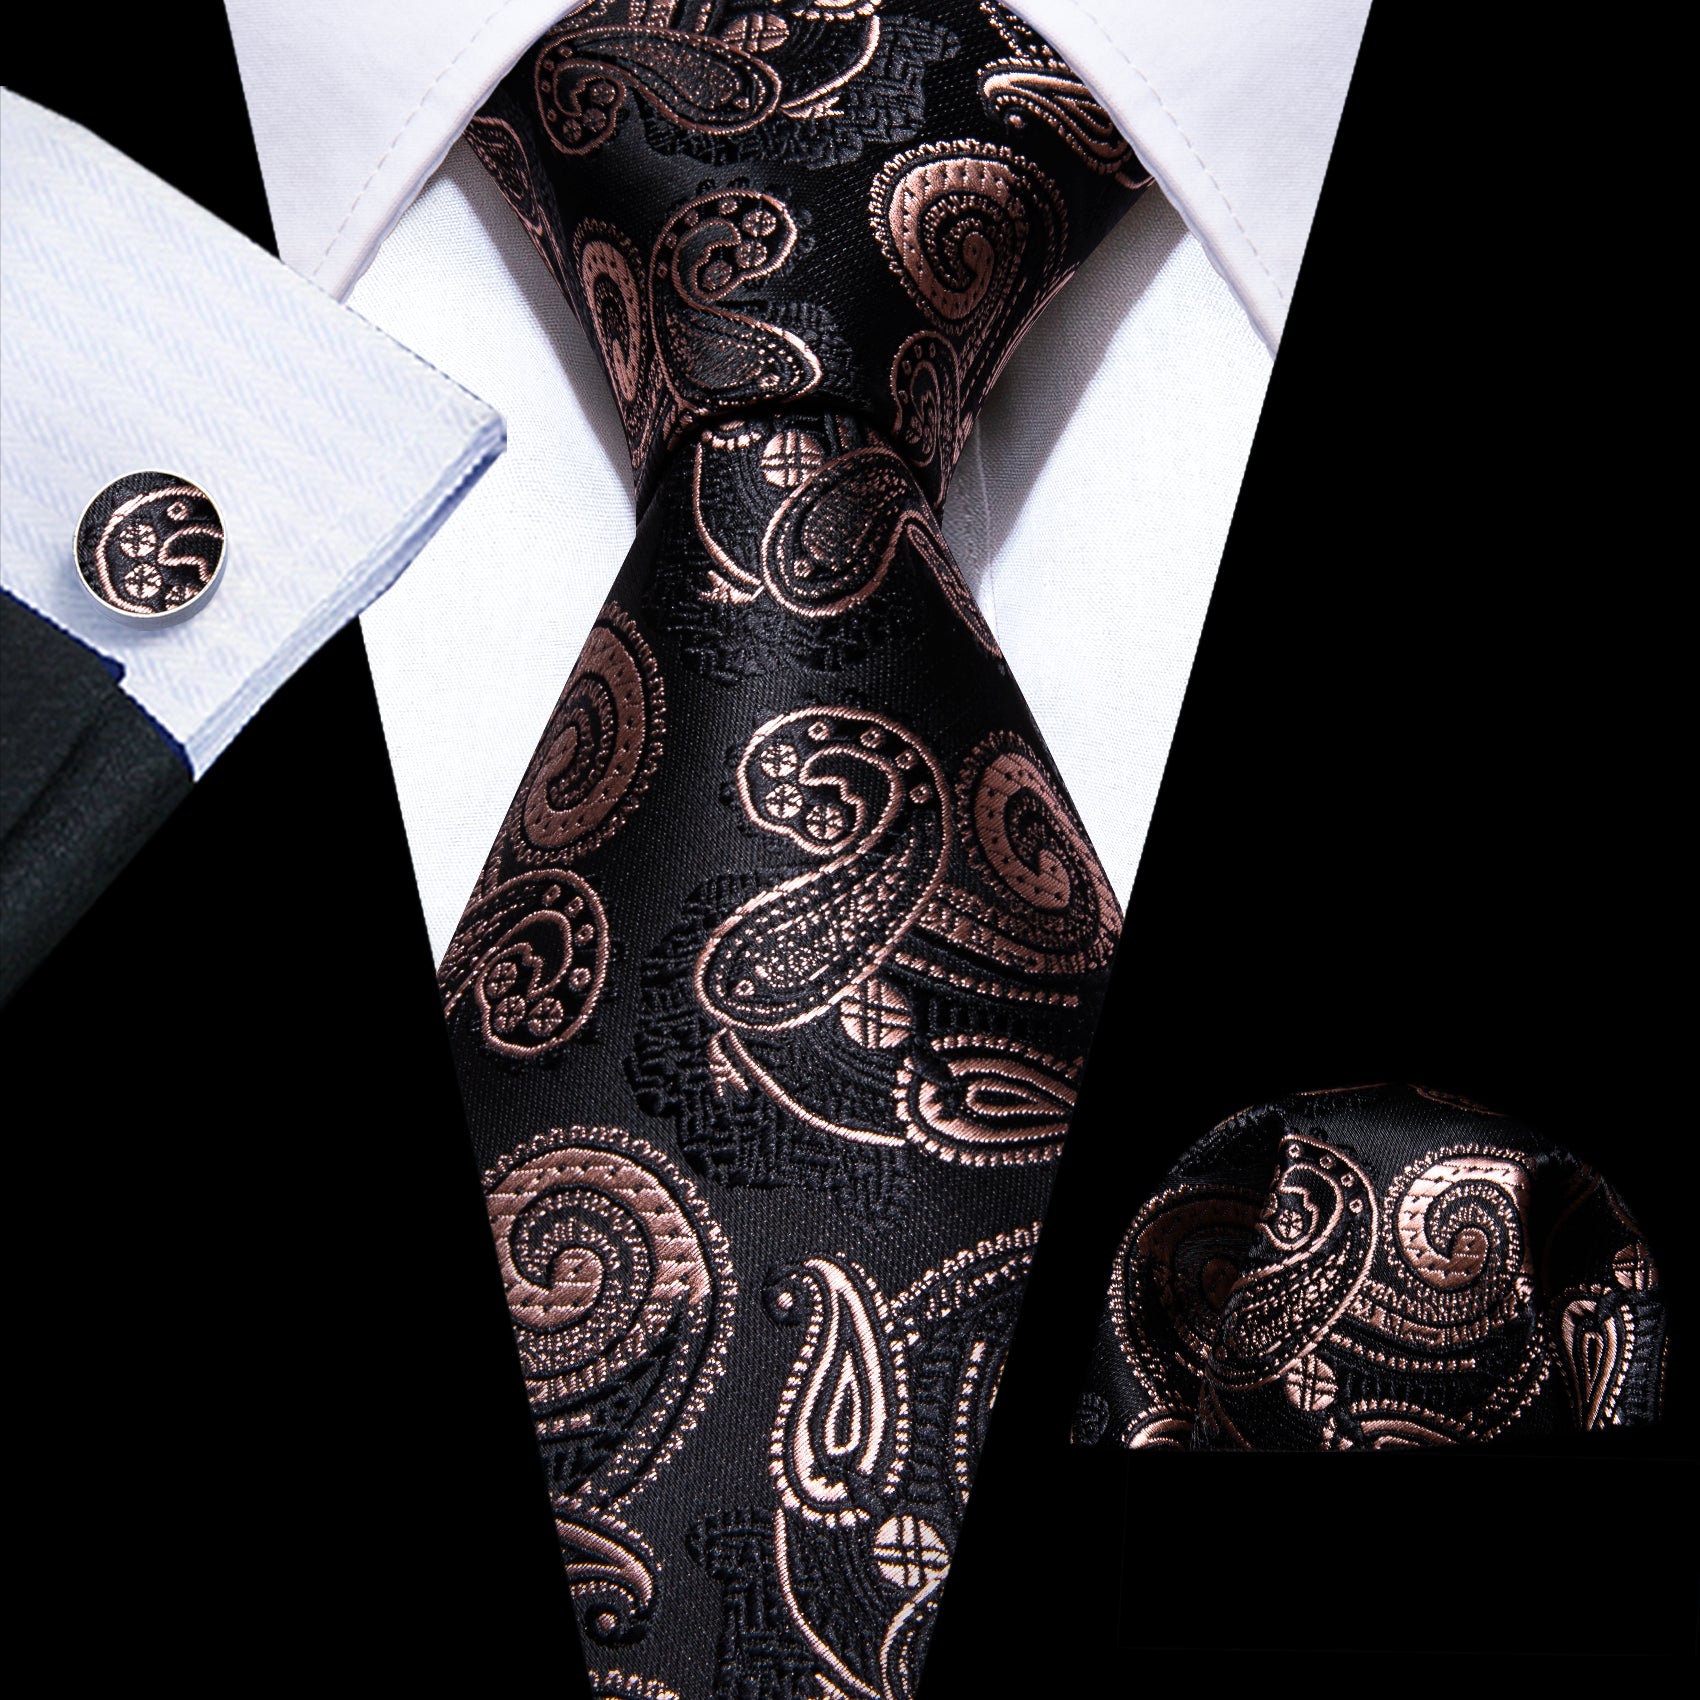 Black Brown Paisley Tie Handkerchief Cufflinks Set